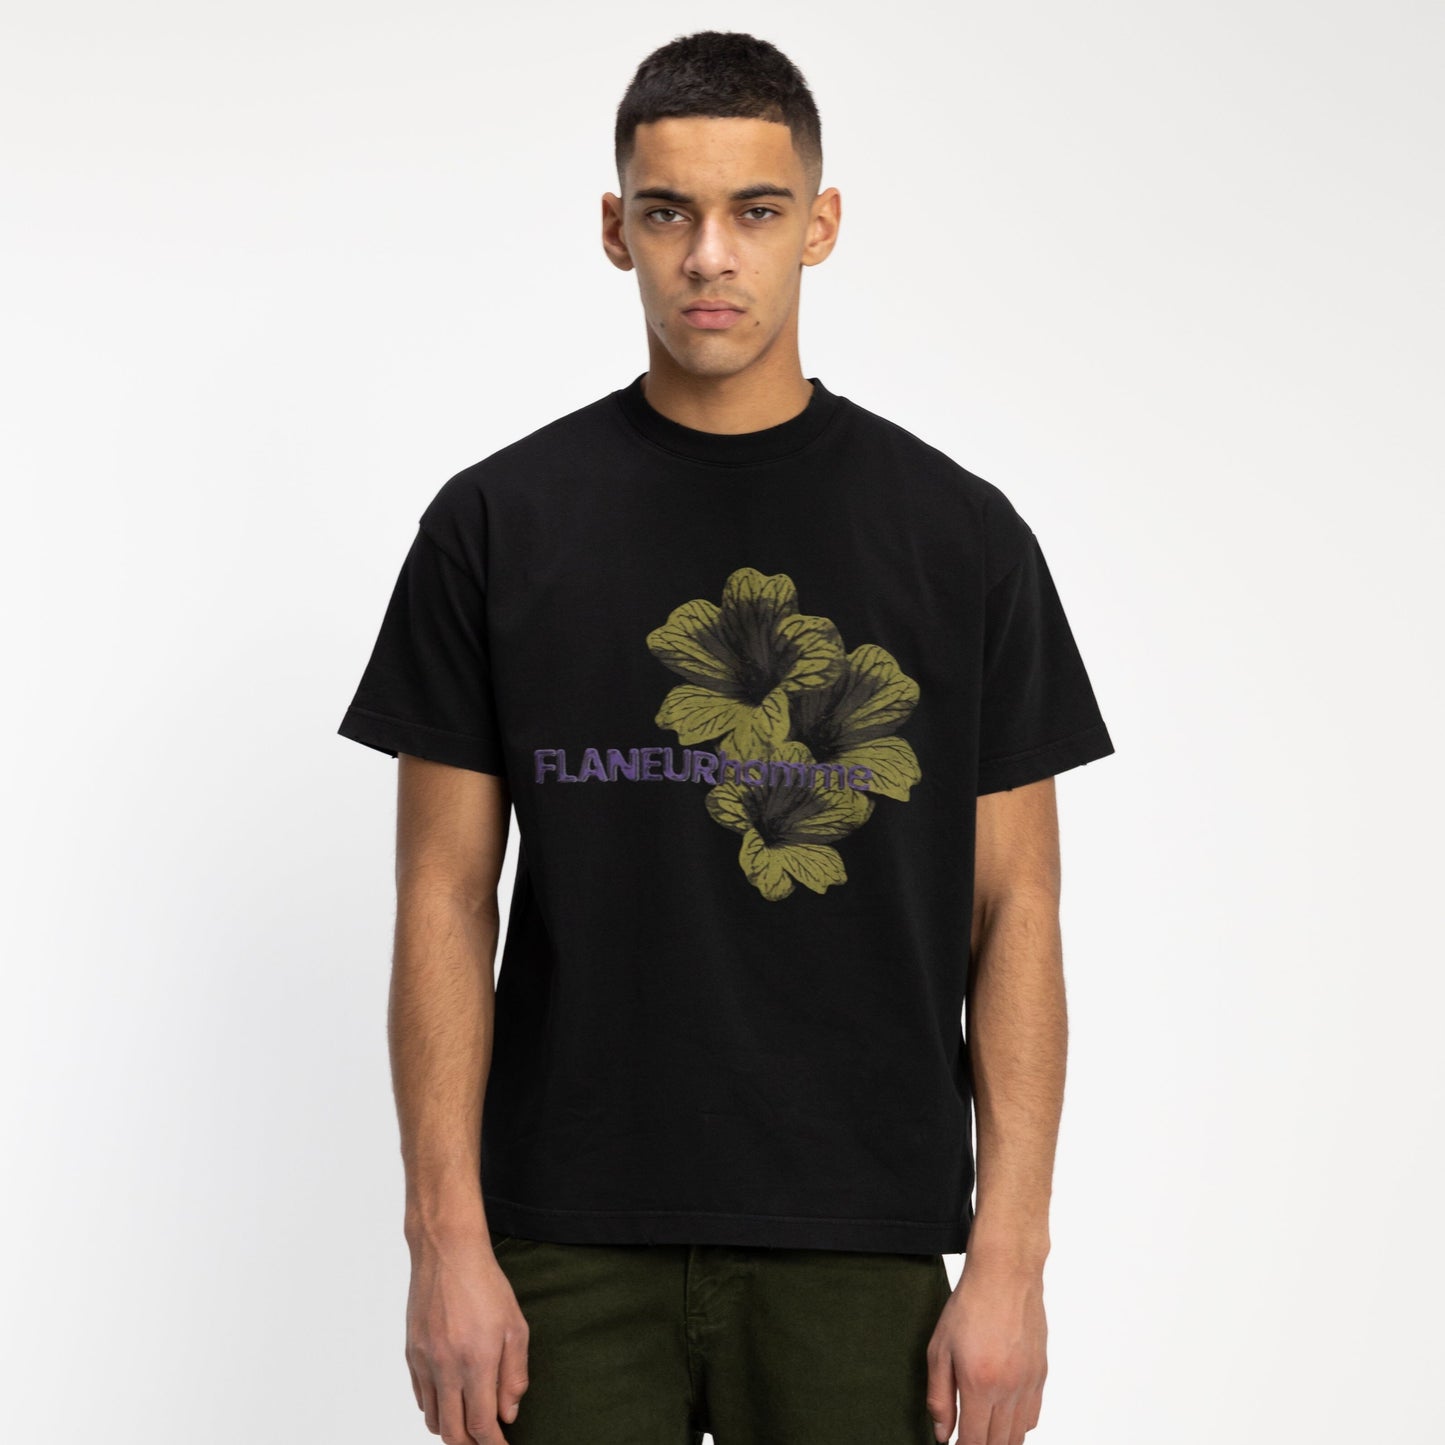 Flaneur Flower T-shirt in Perlite Black